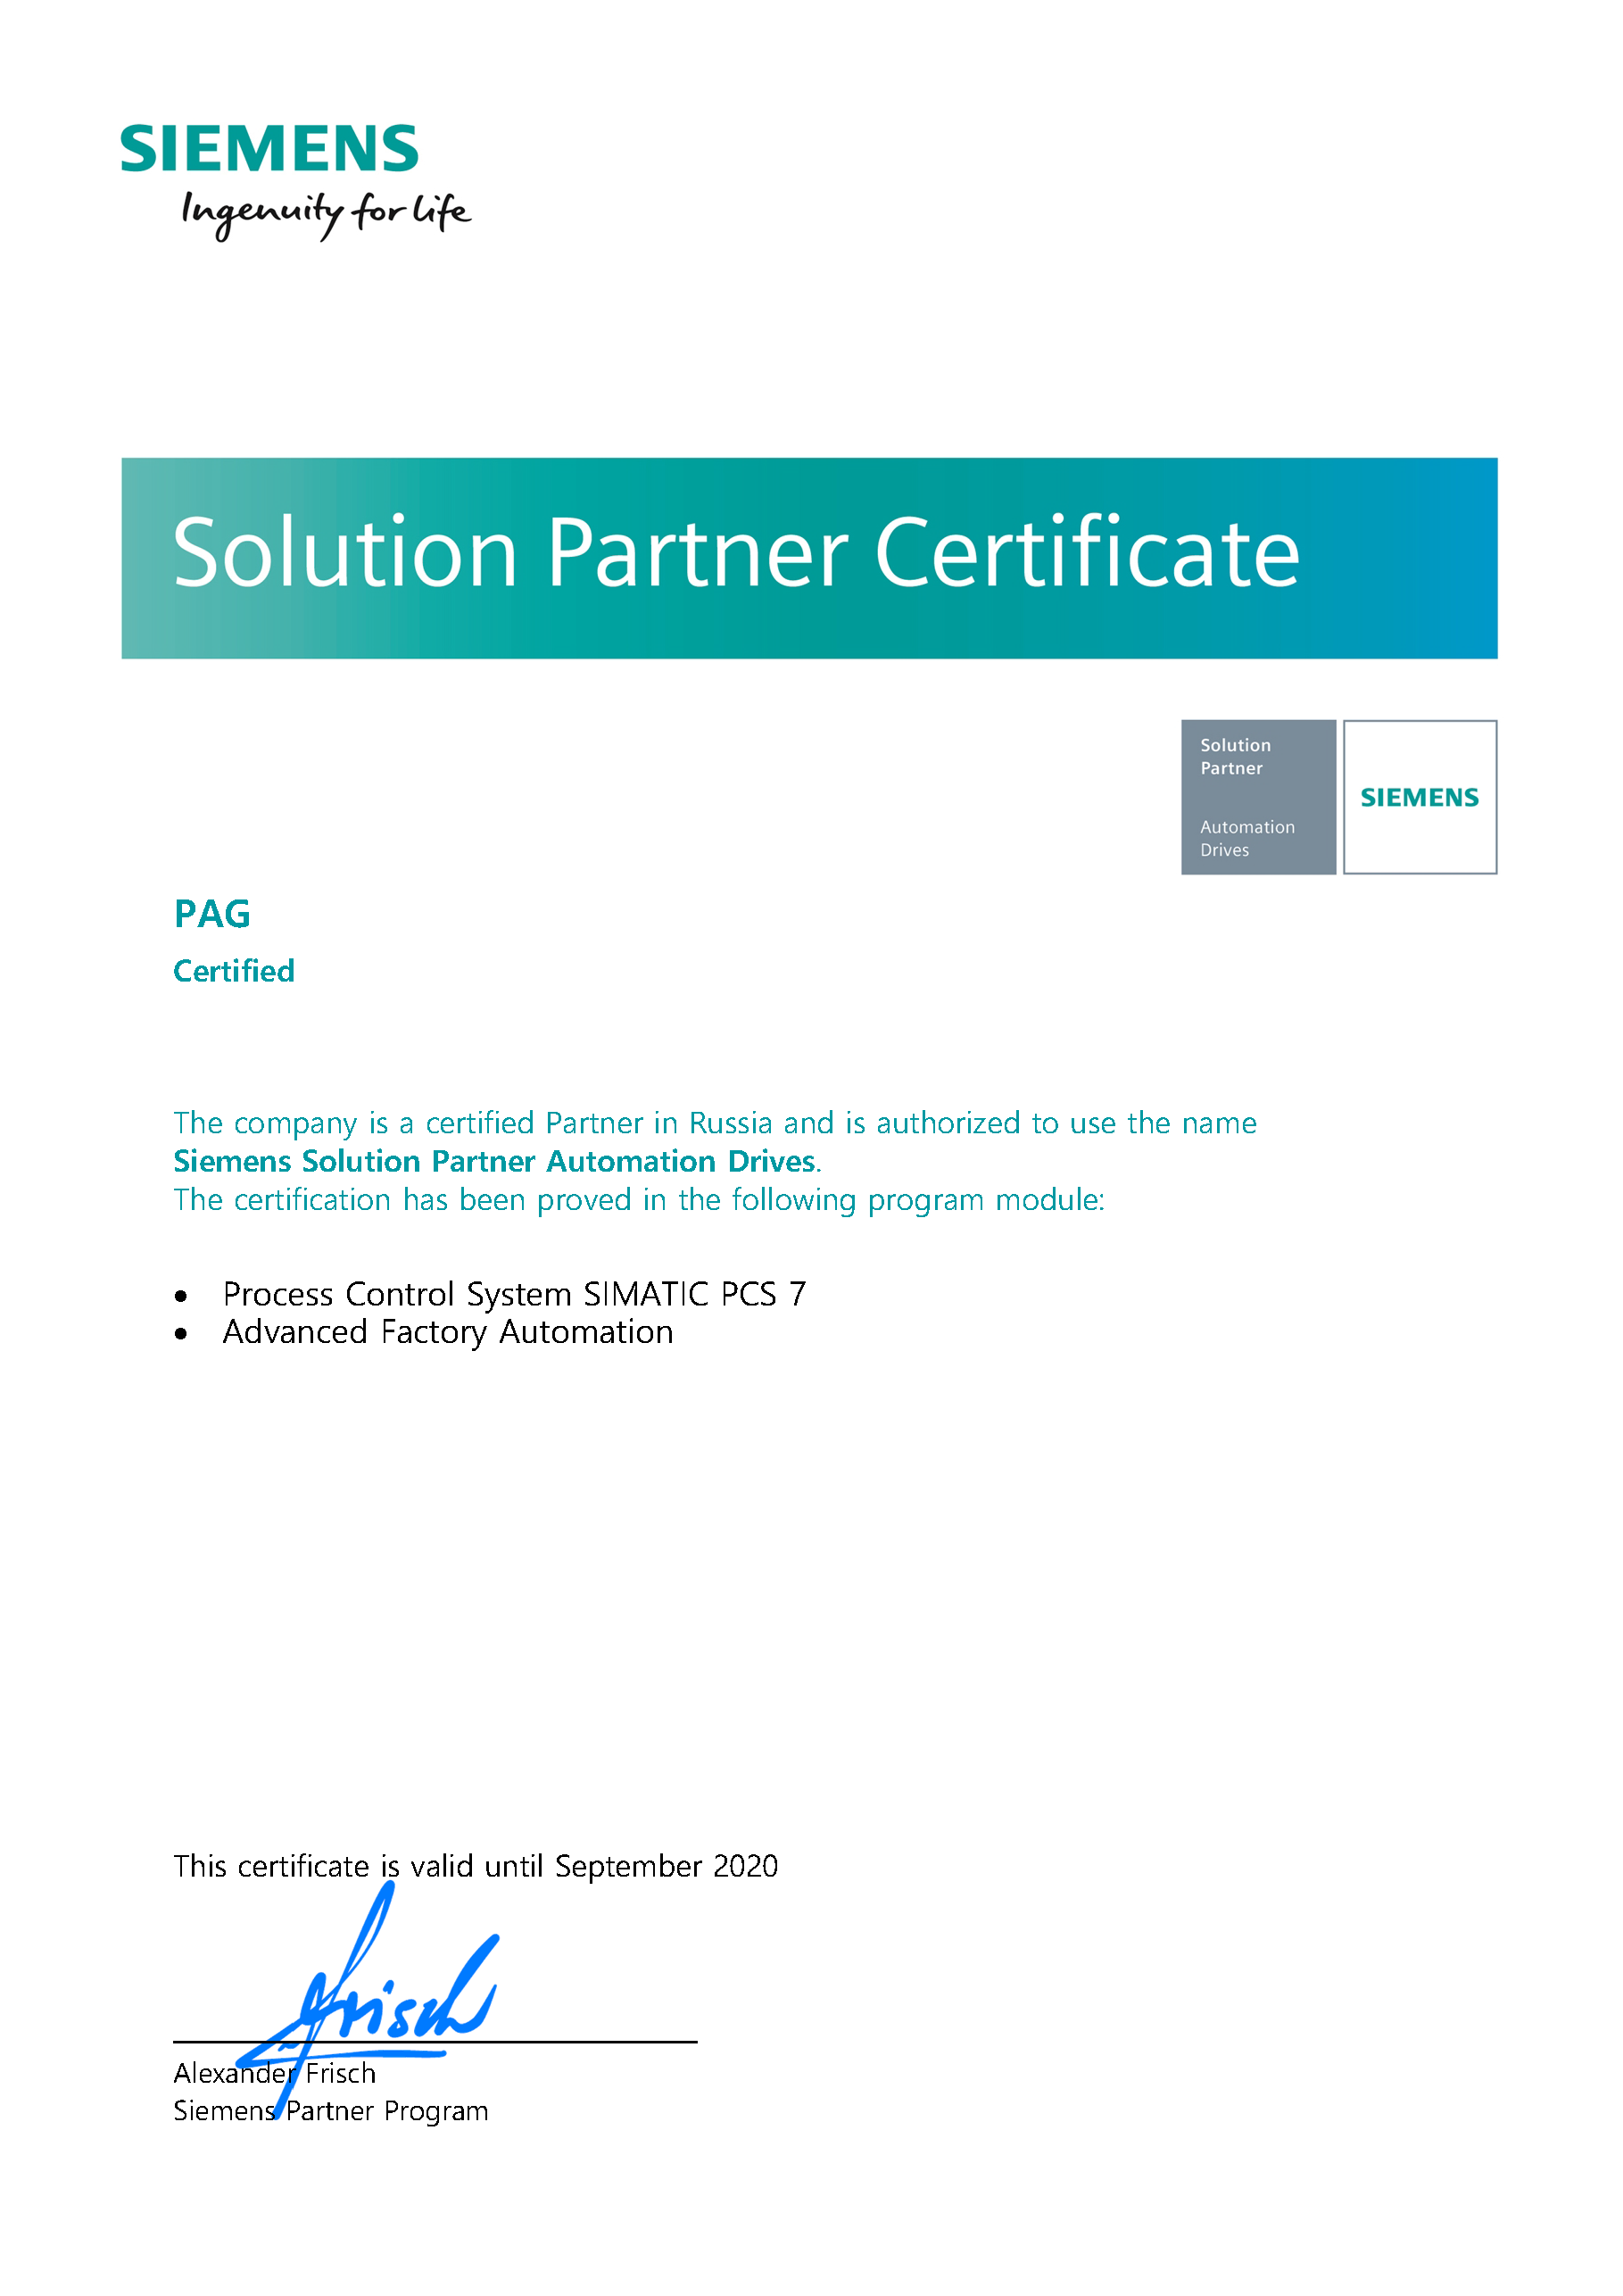 Siemens - Solution Partner Certificate